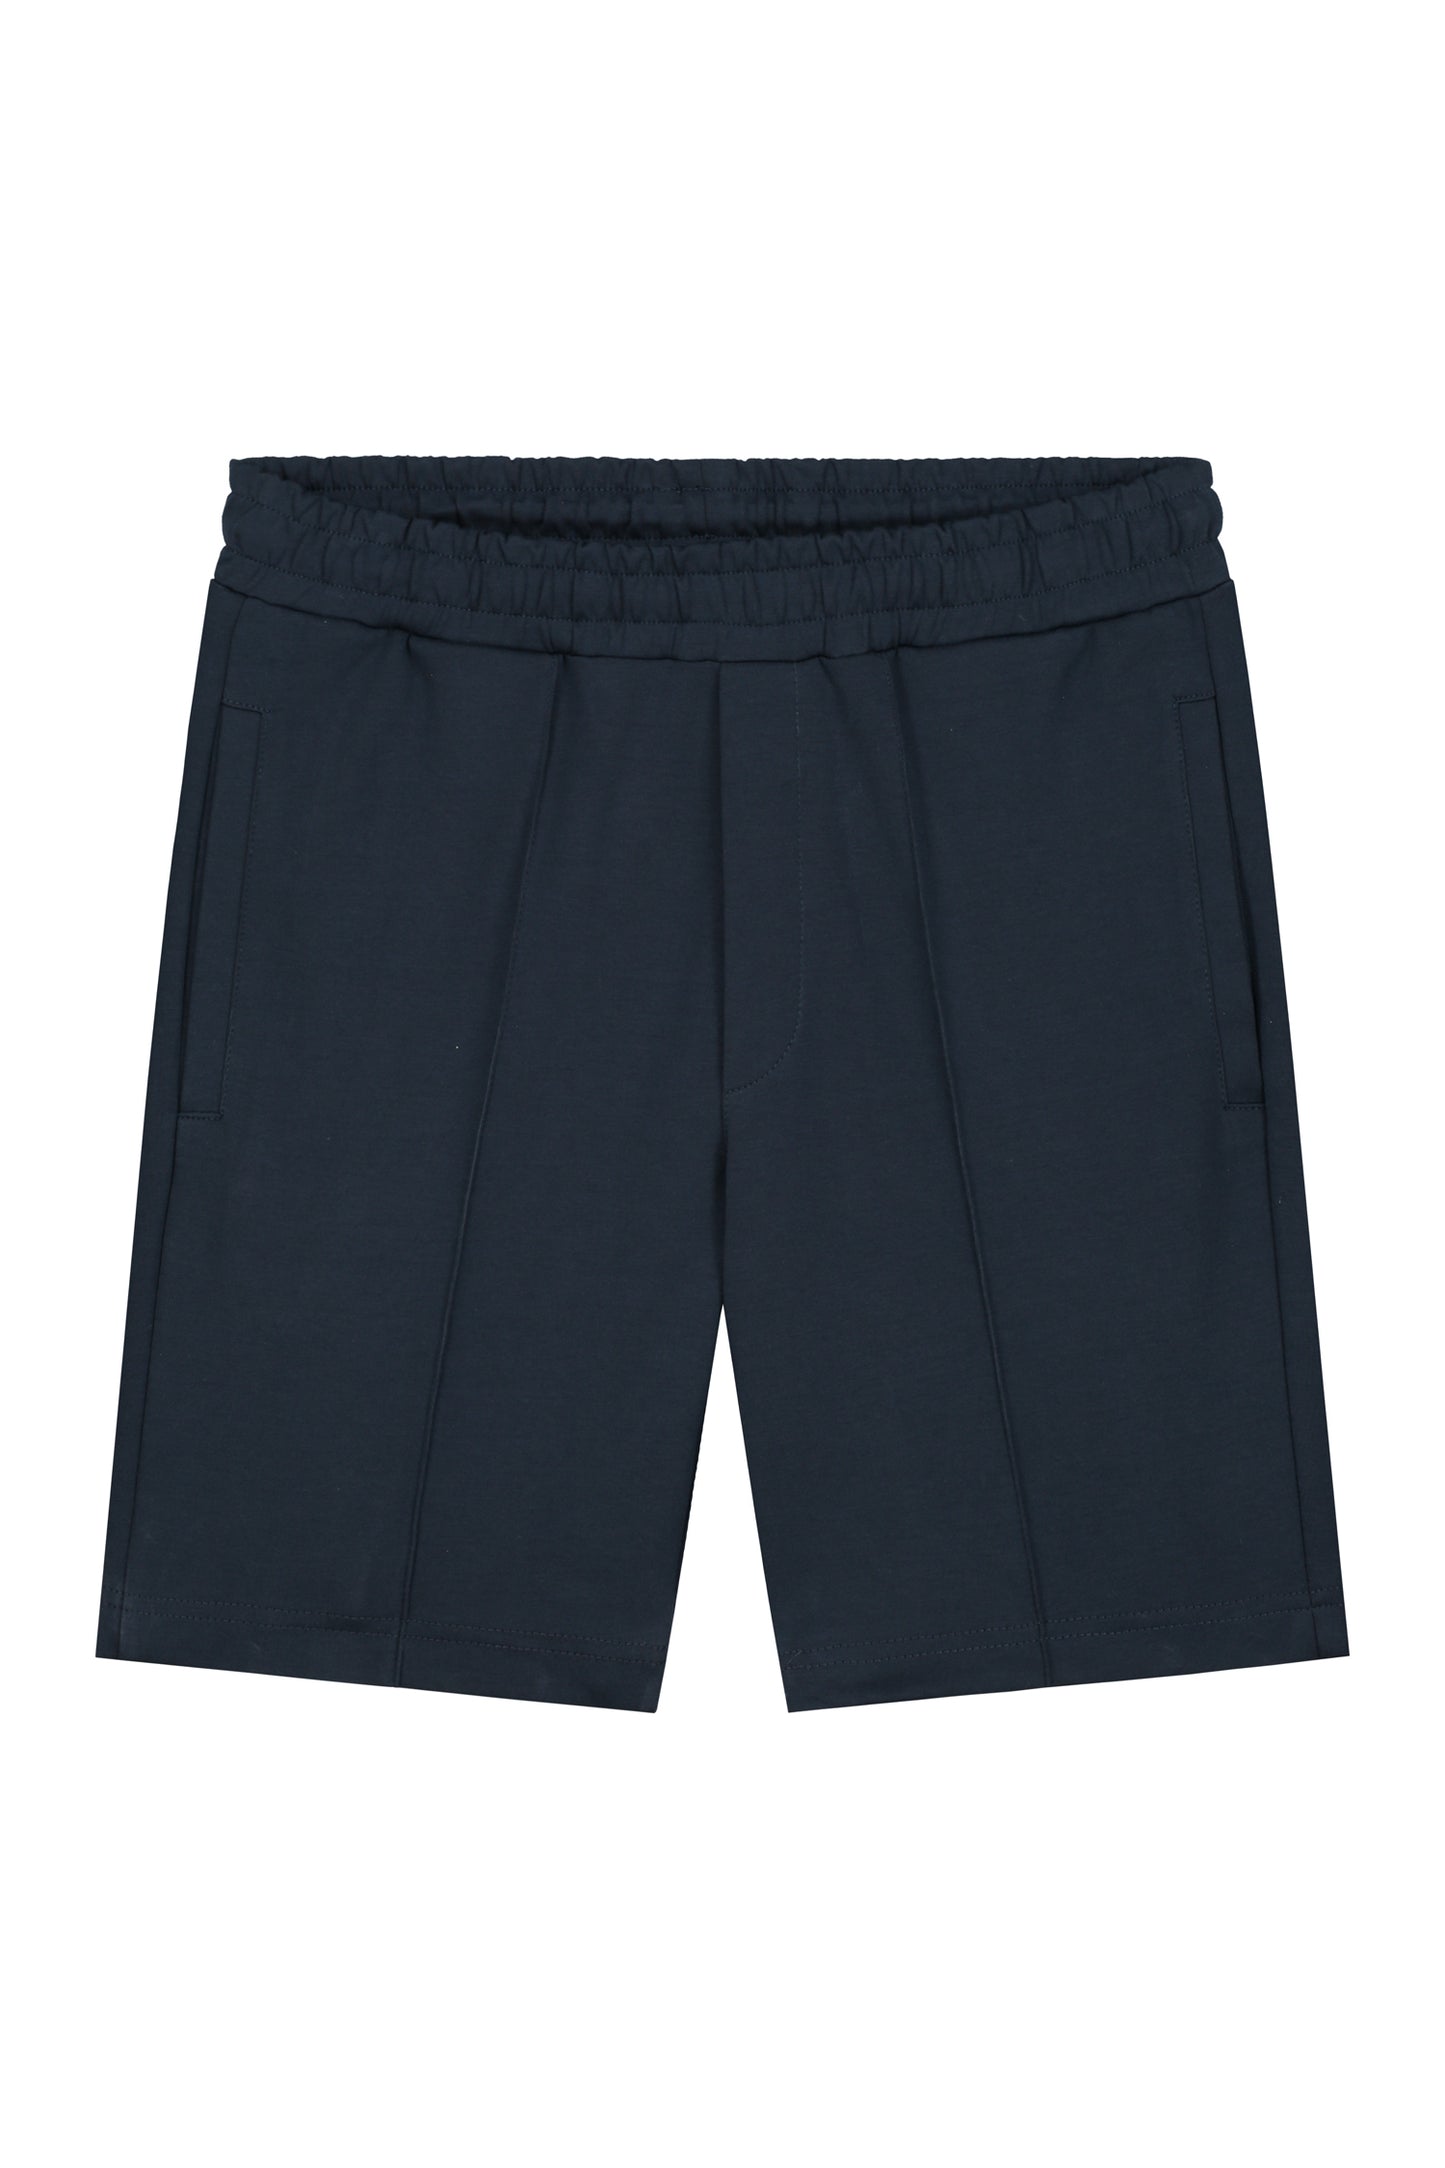 Shorts - Navy